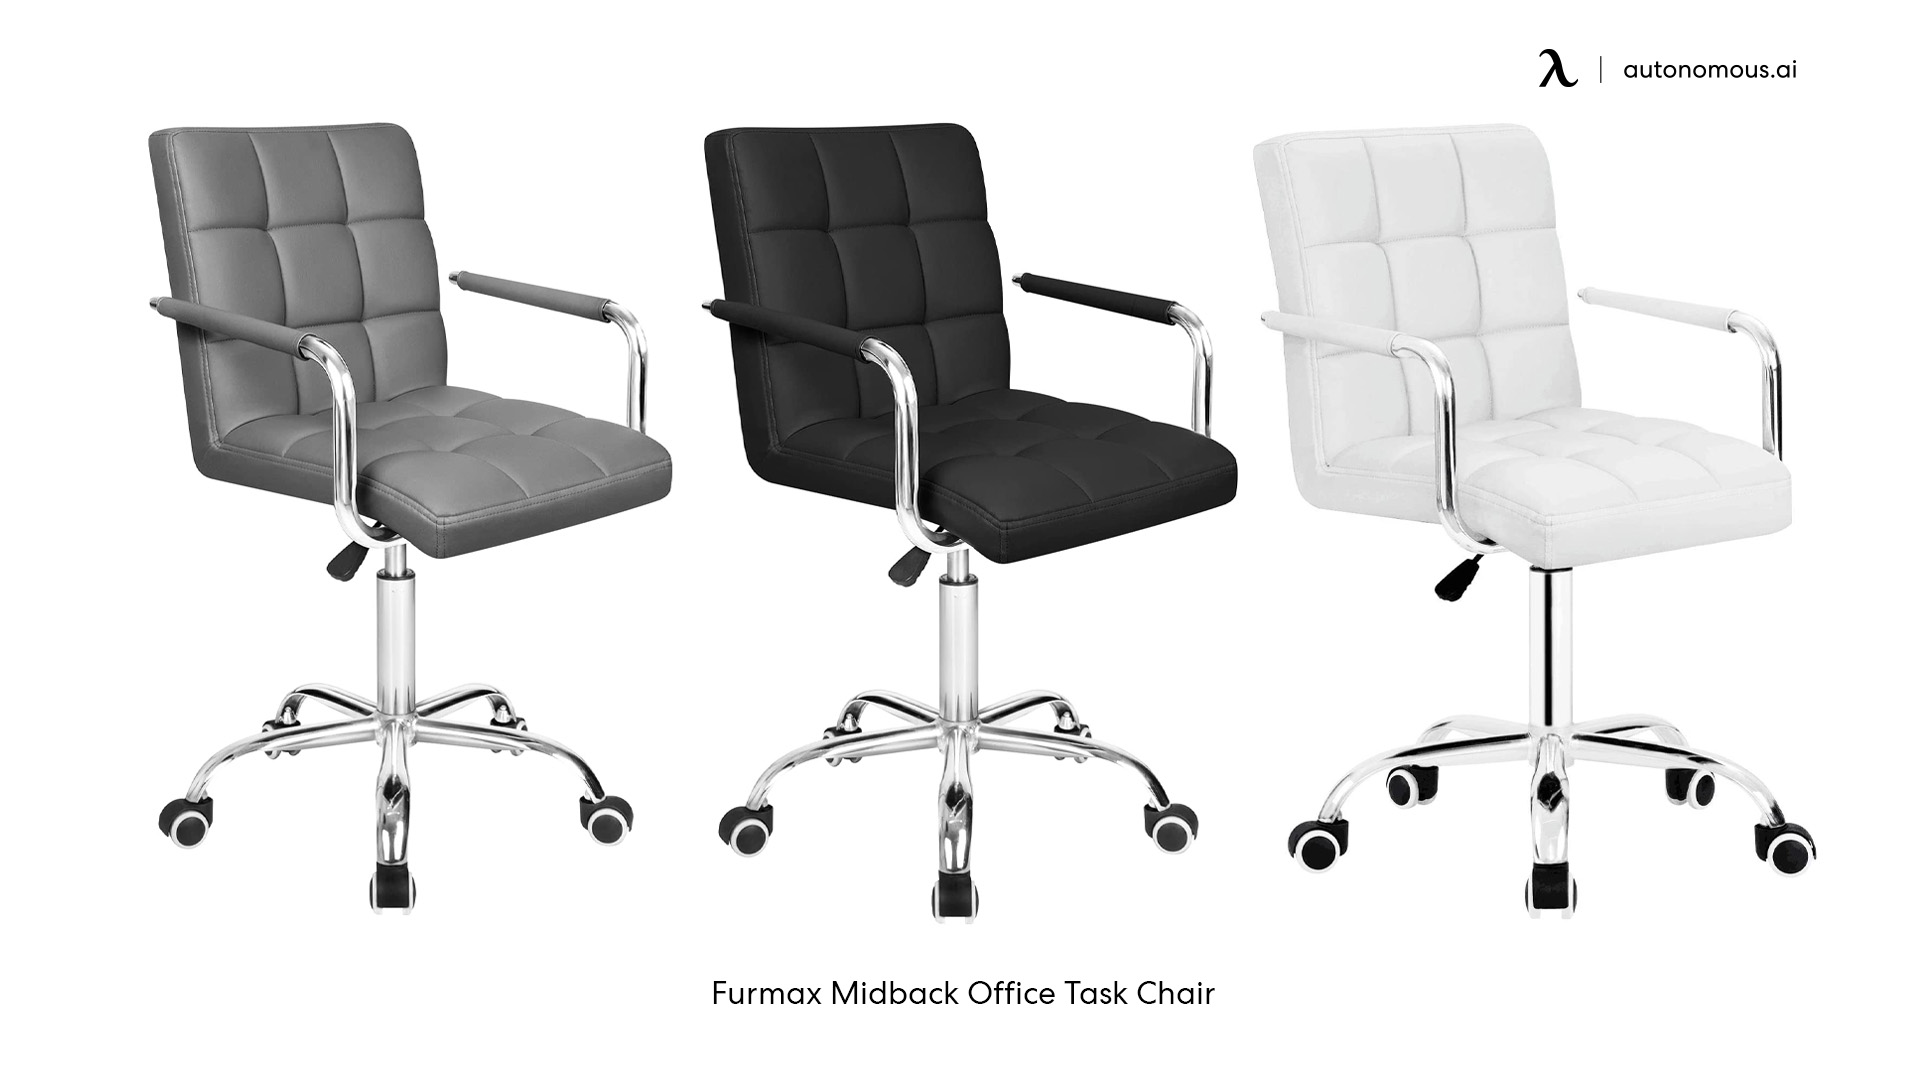 Furmax Midback Office Task Chair